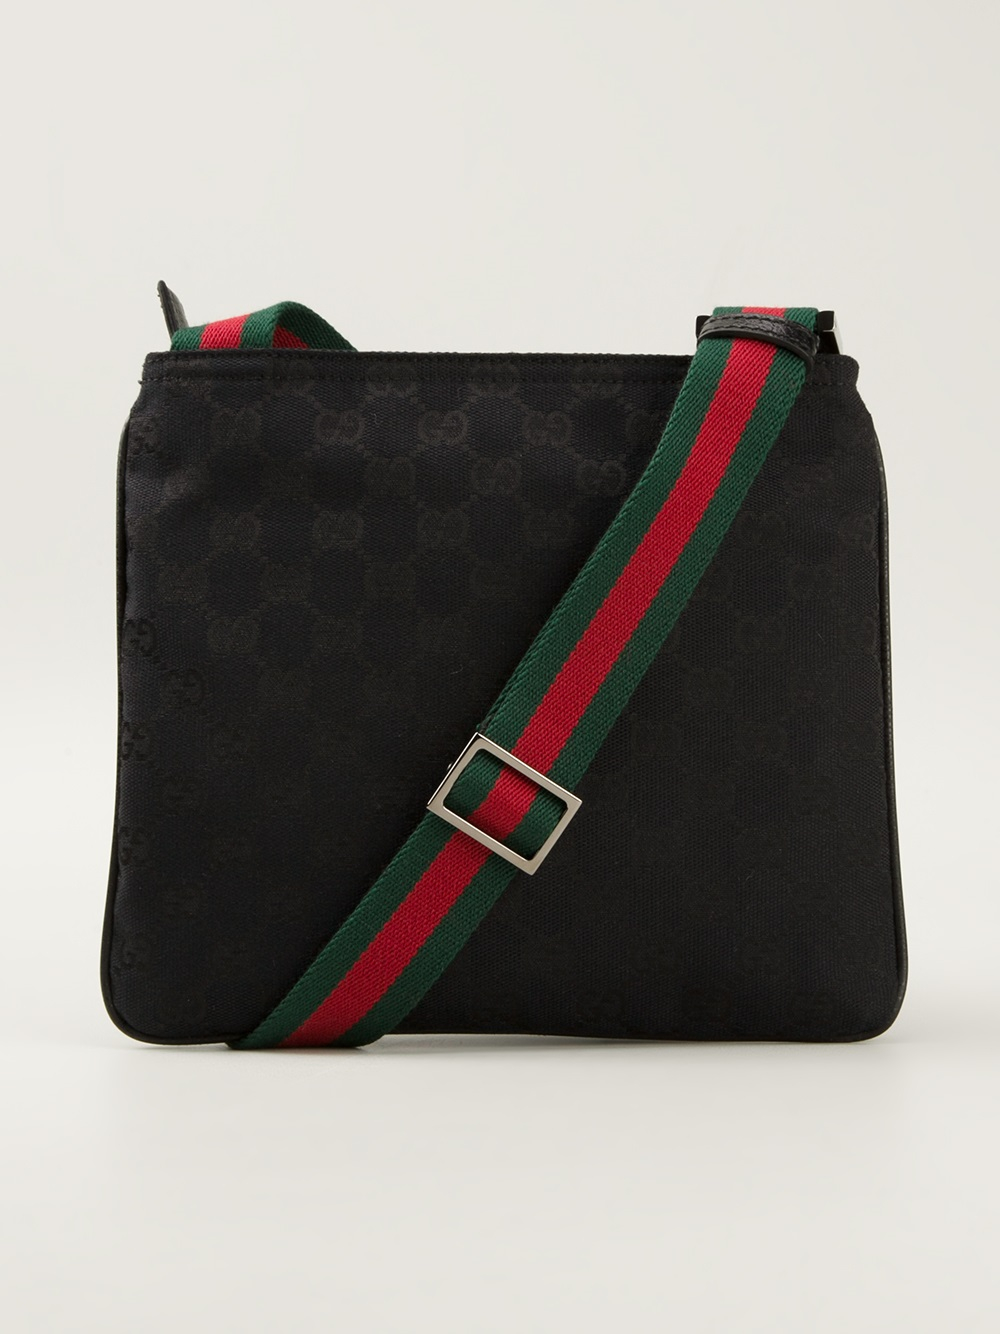 Lyst - Gucci Monogram Crossbody Bag in Black for Men